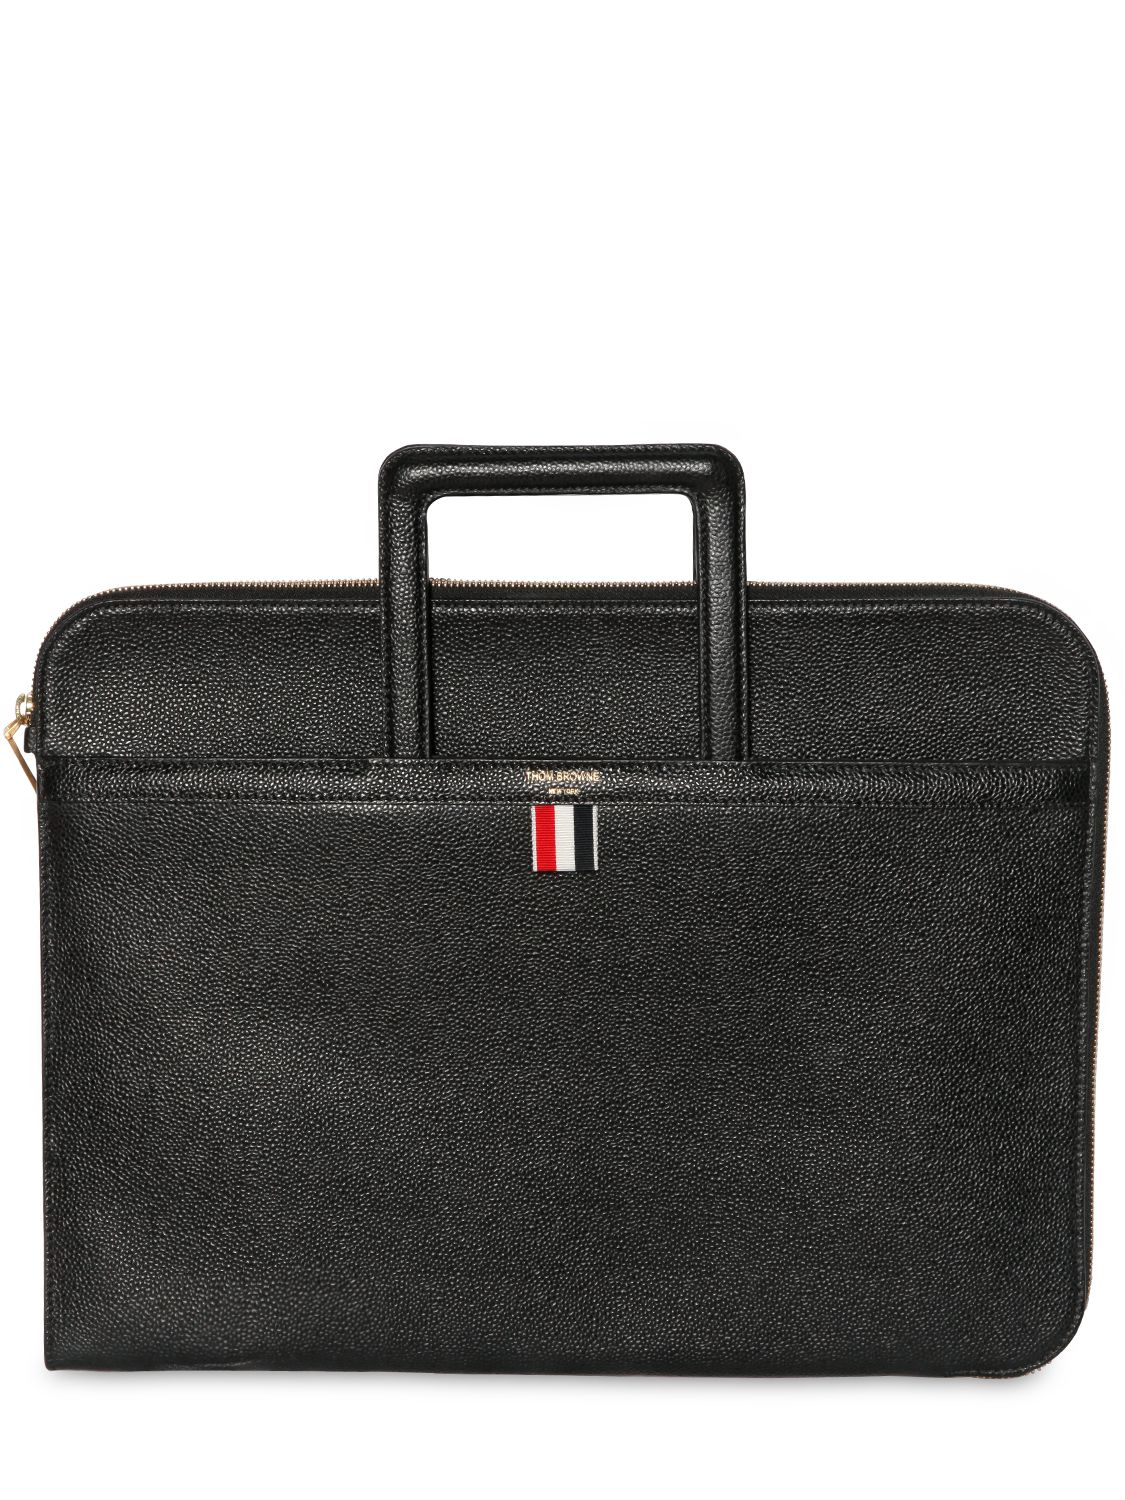 Thom browne Pebbled Leather Slim Briefcase in Black for Men | Lyst